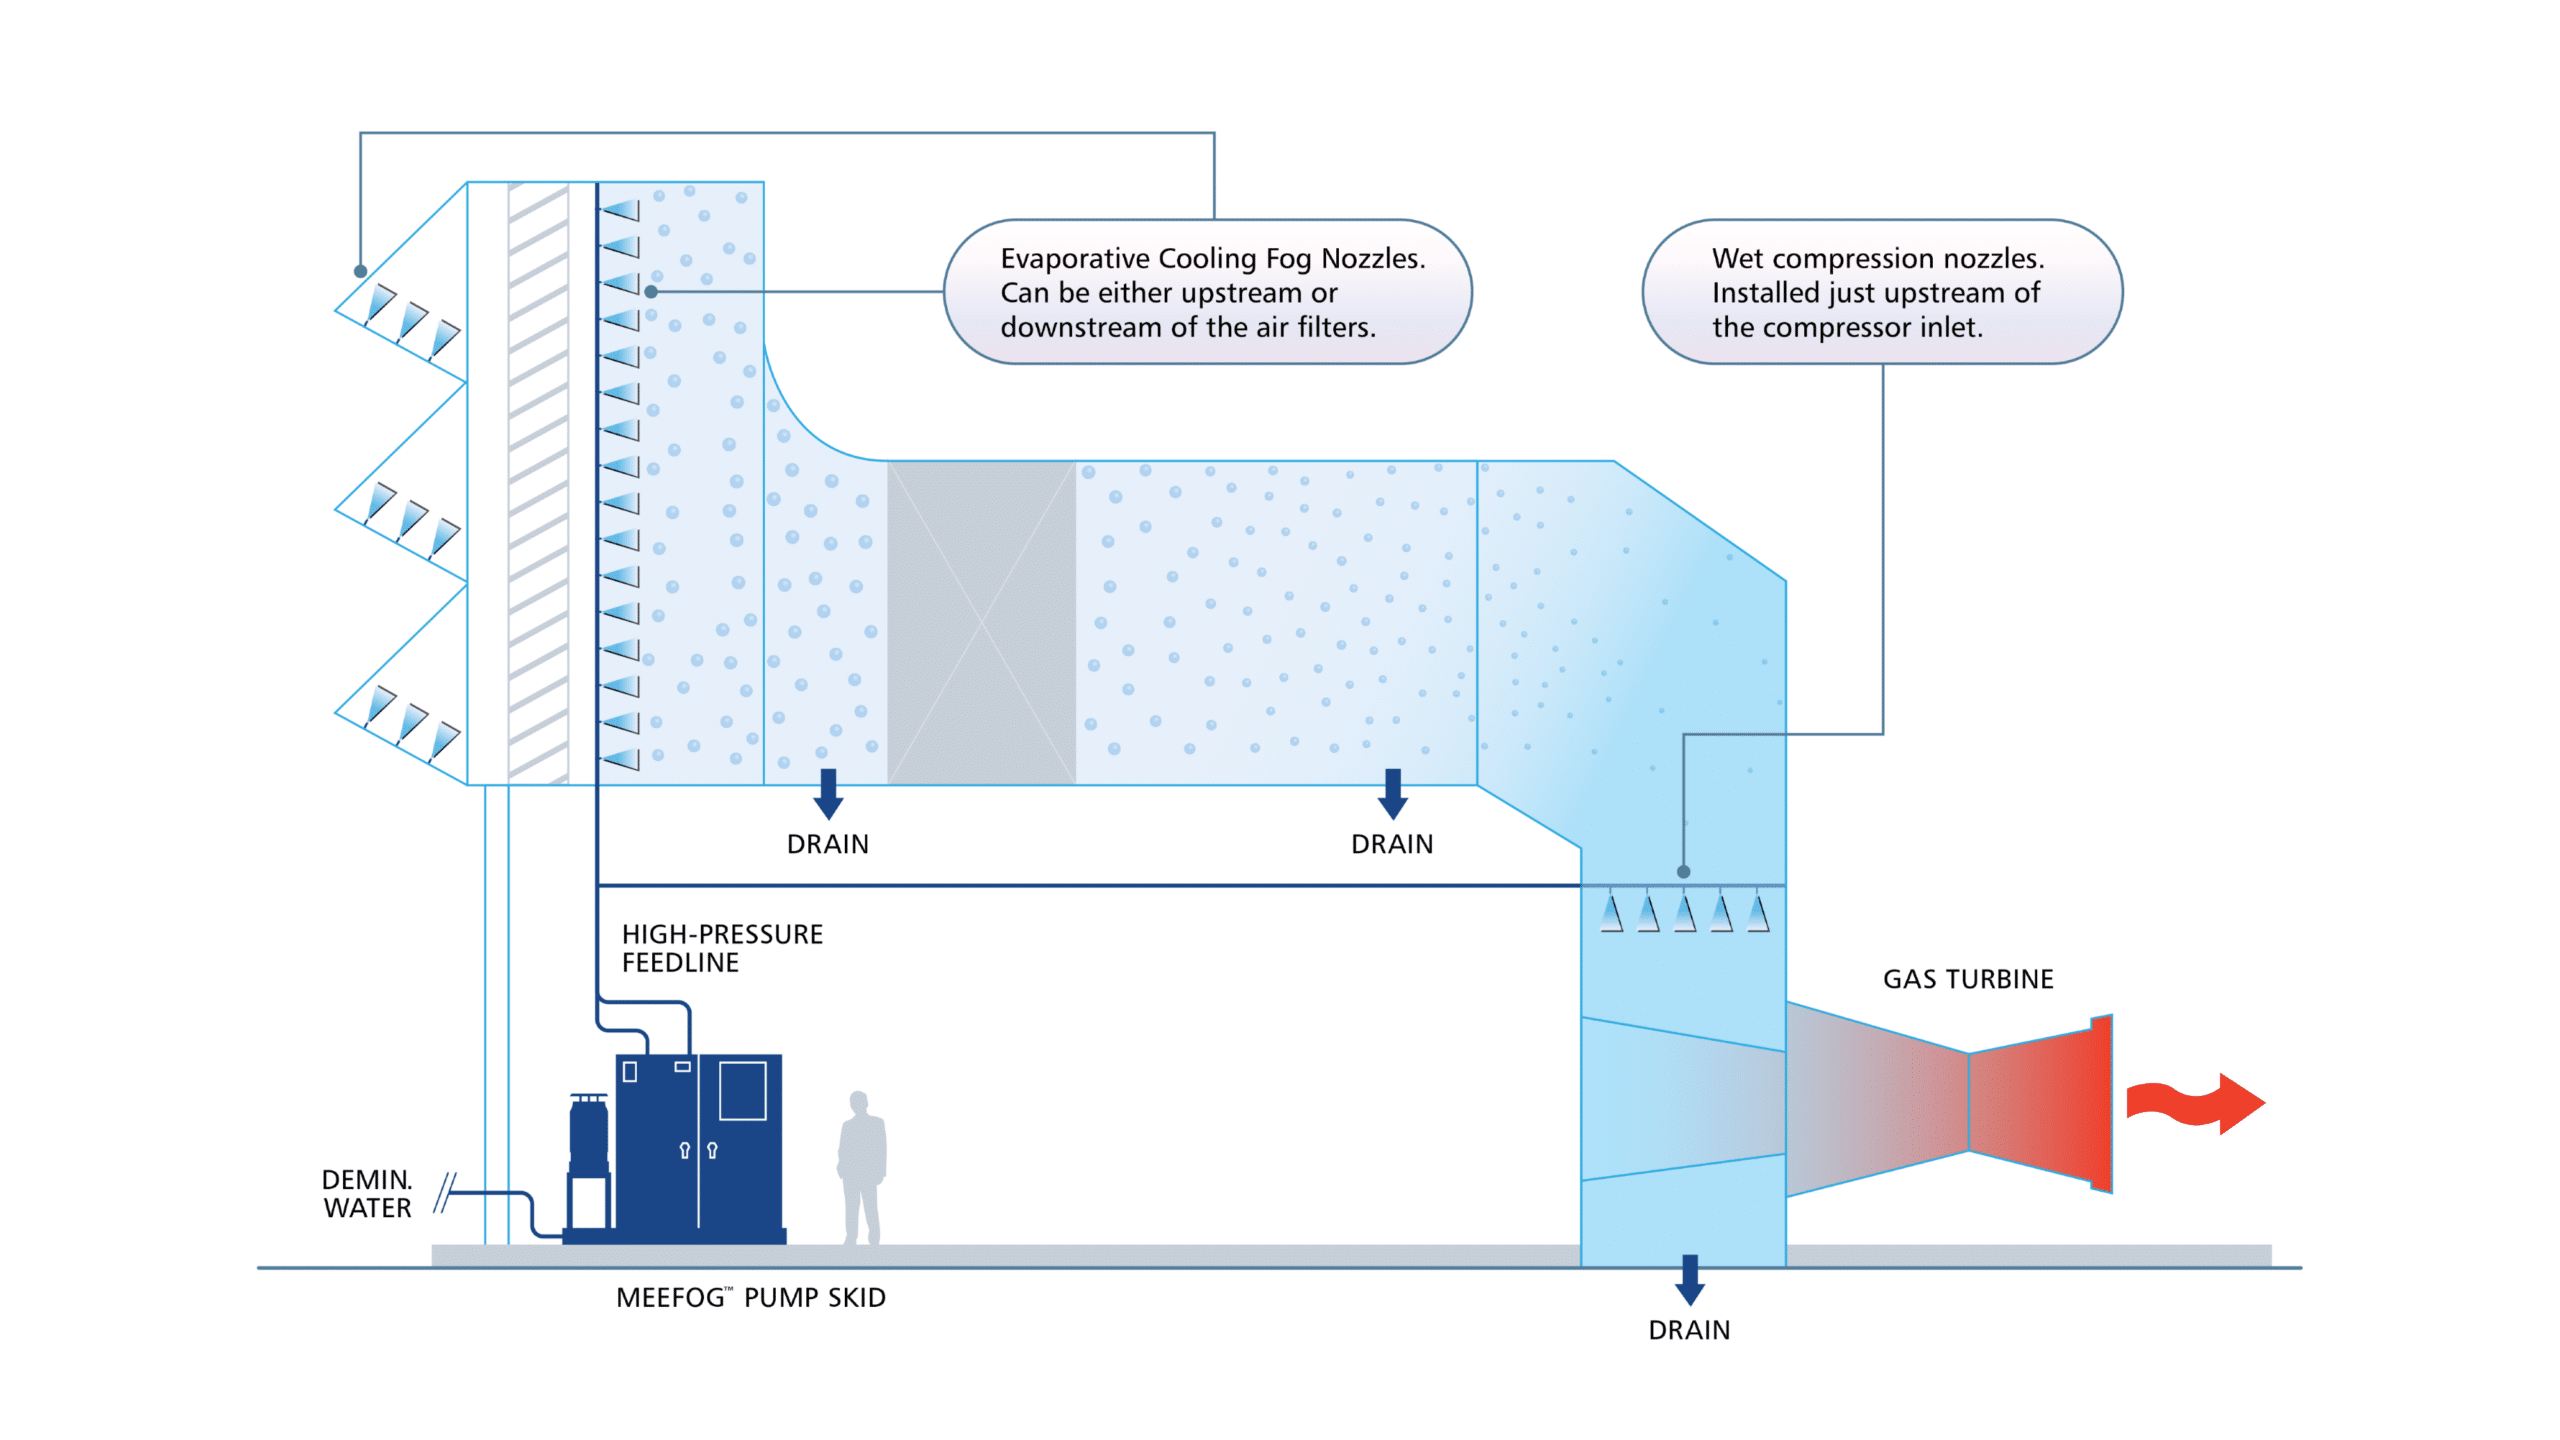 Meefog Gas Turbine Diagram showing placement of fog nozzles.